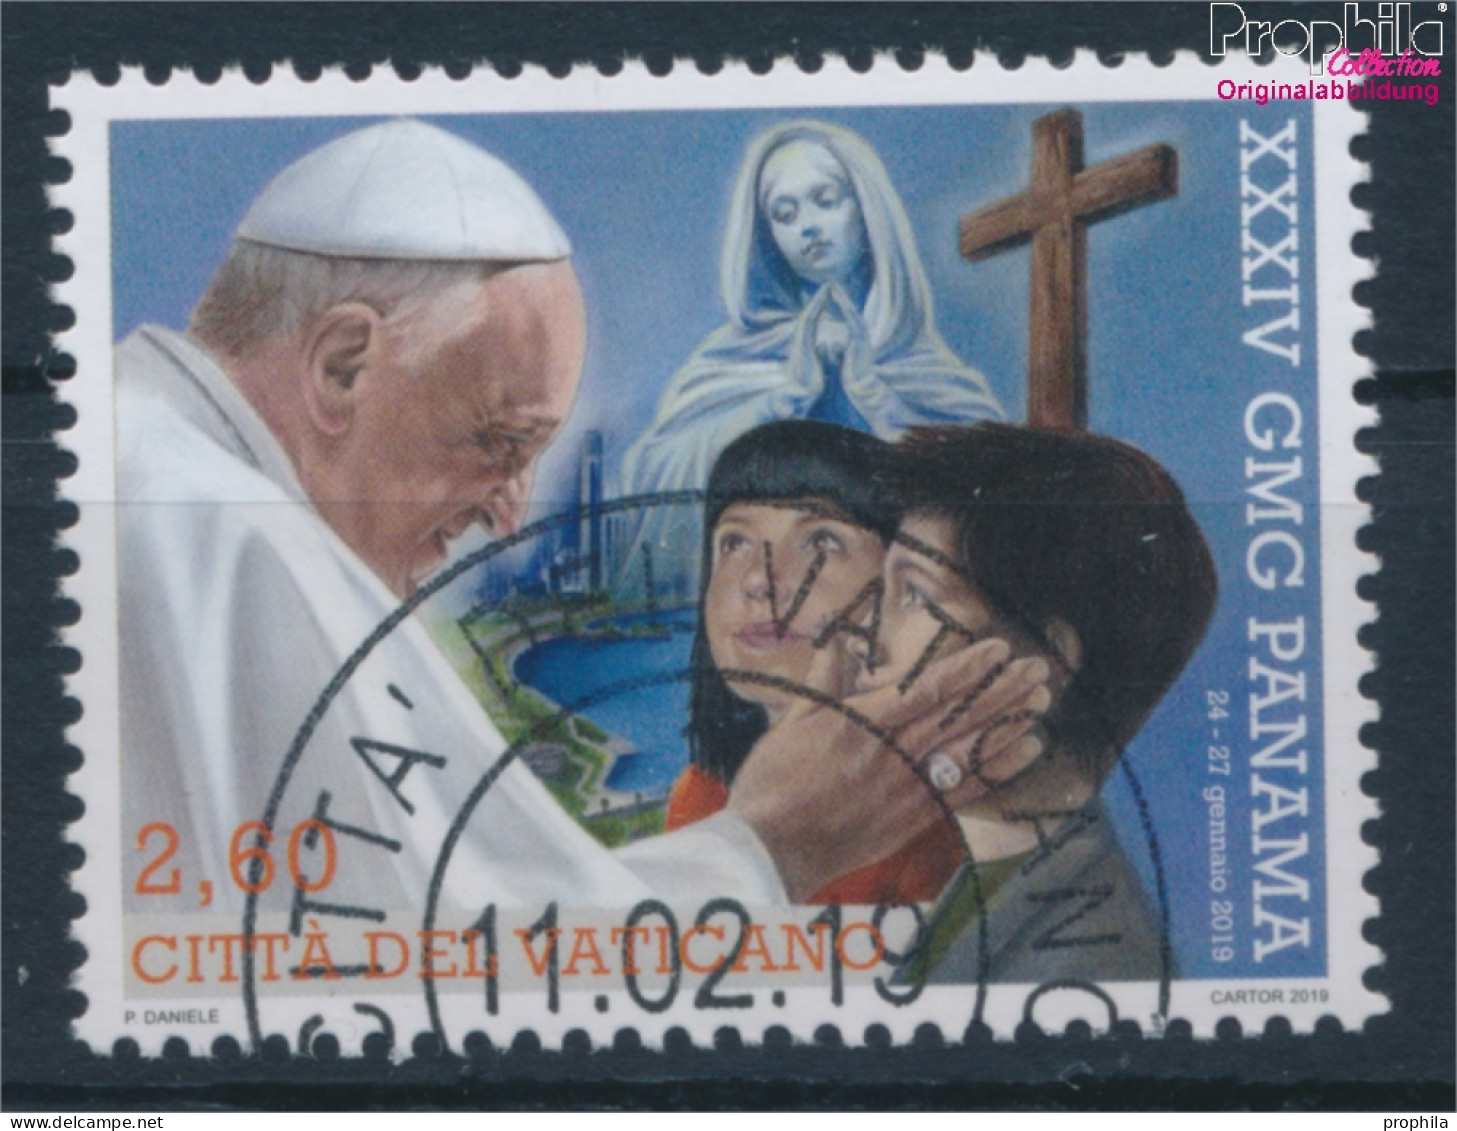 Vatikanstadt 1955 (kompl.Ausg.) Gestempelt 2019 Weltjugendtag (10405924 - Oblitérés